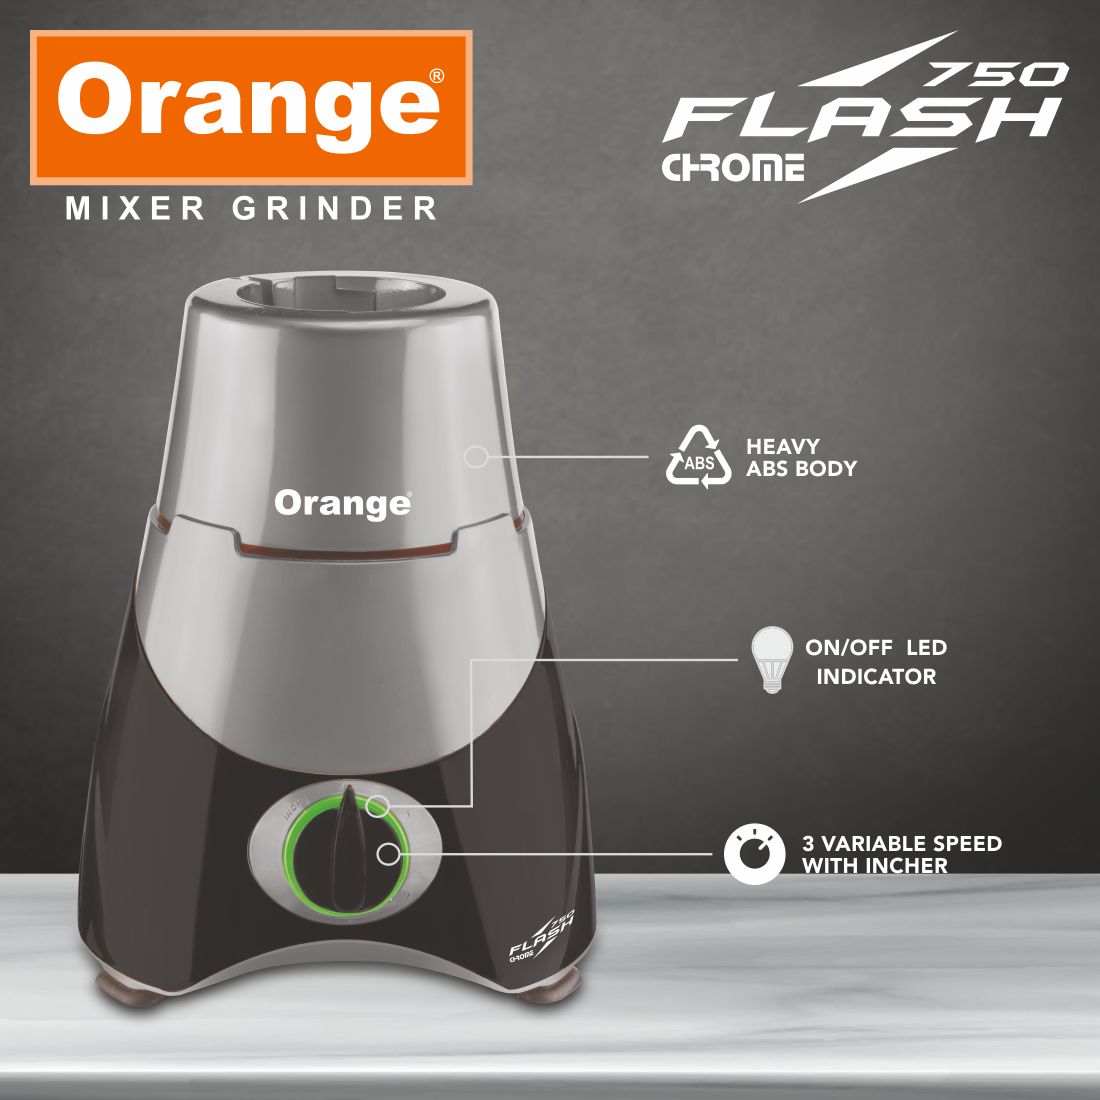 Orange 750 Watt Mixer Grinder Flash | 100% Copper With Heavy Duty Motor | 3 Virgin & Unbreakable SS Coil Jars (1 Wet, 1 Dry &1 Chutney Jar) | Stainless Steel Blades | 2 Year Motor Warranty | Black